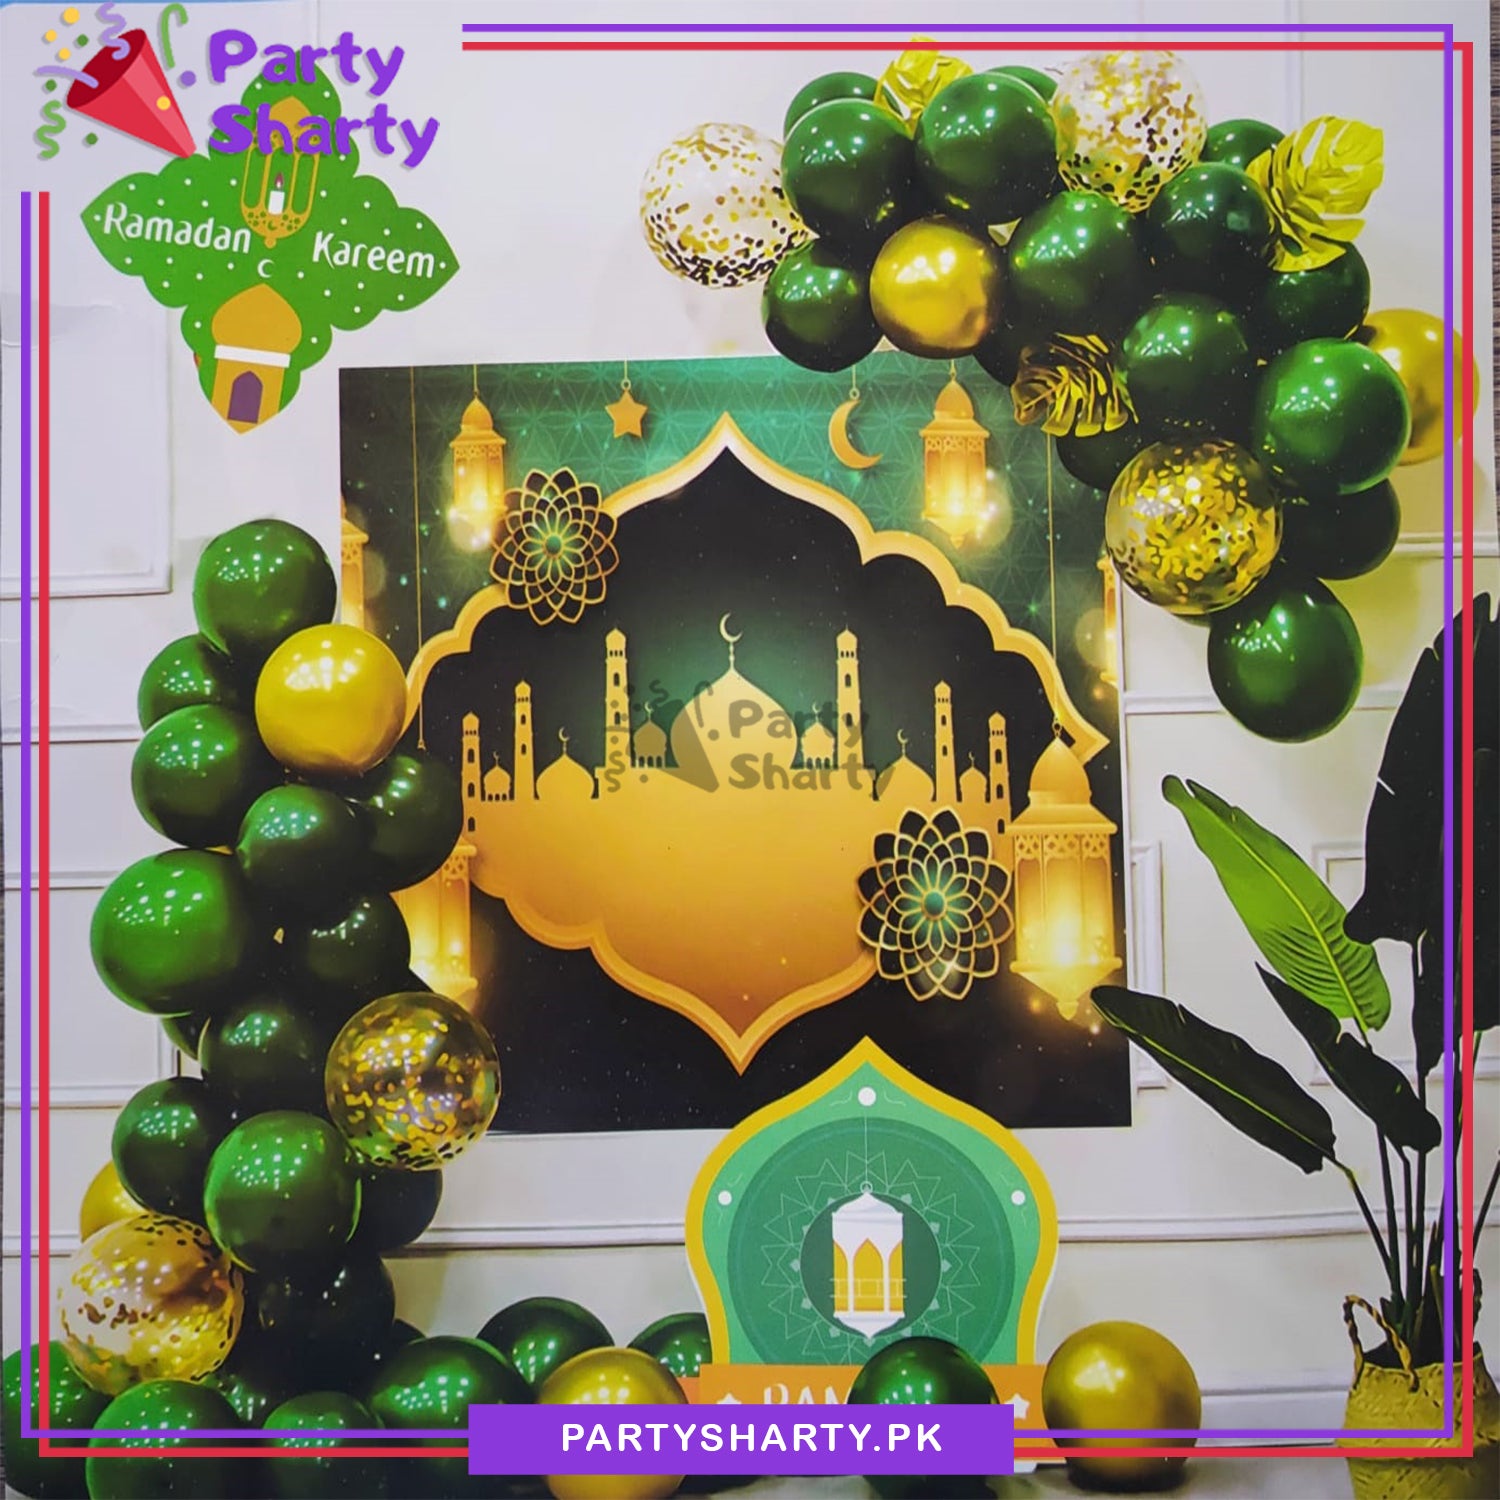 Ramadan Kareem Green & Golden Theme Set for Ramadan Iftar Party Decoration and Celebration